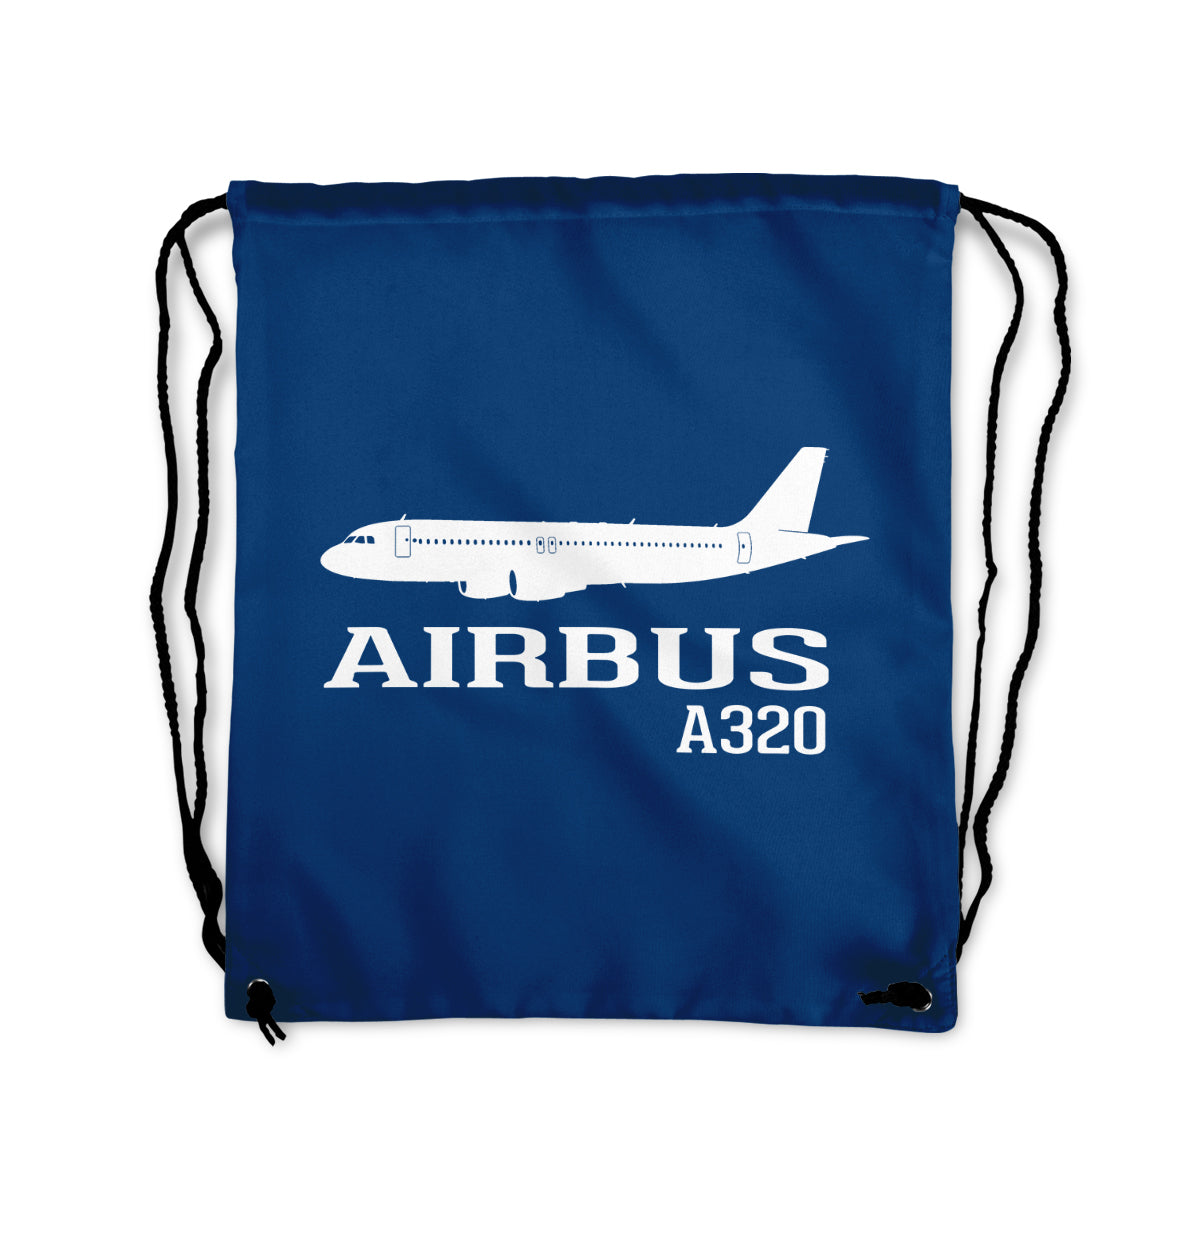 Airbus A320 Printed Designed Drawstring Bags